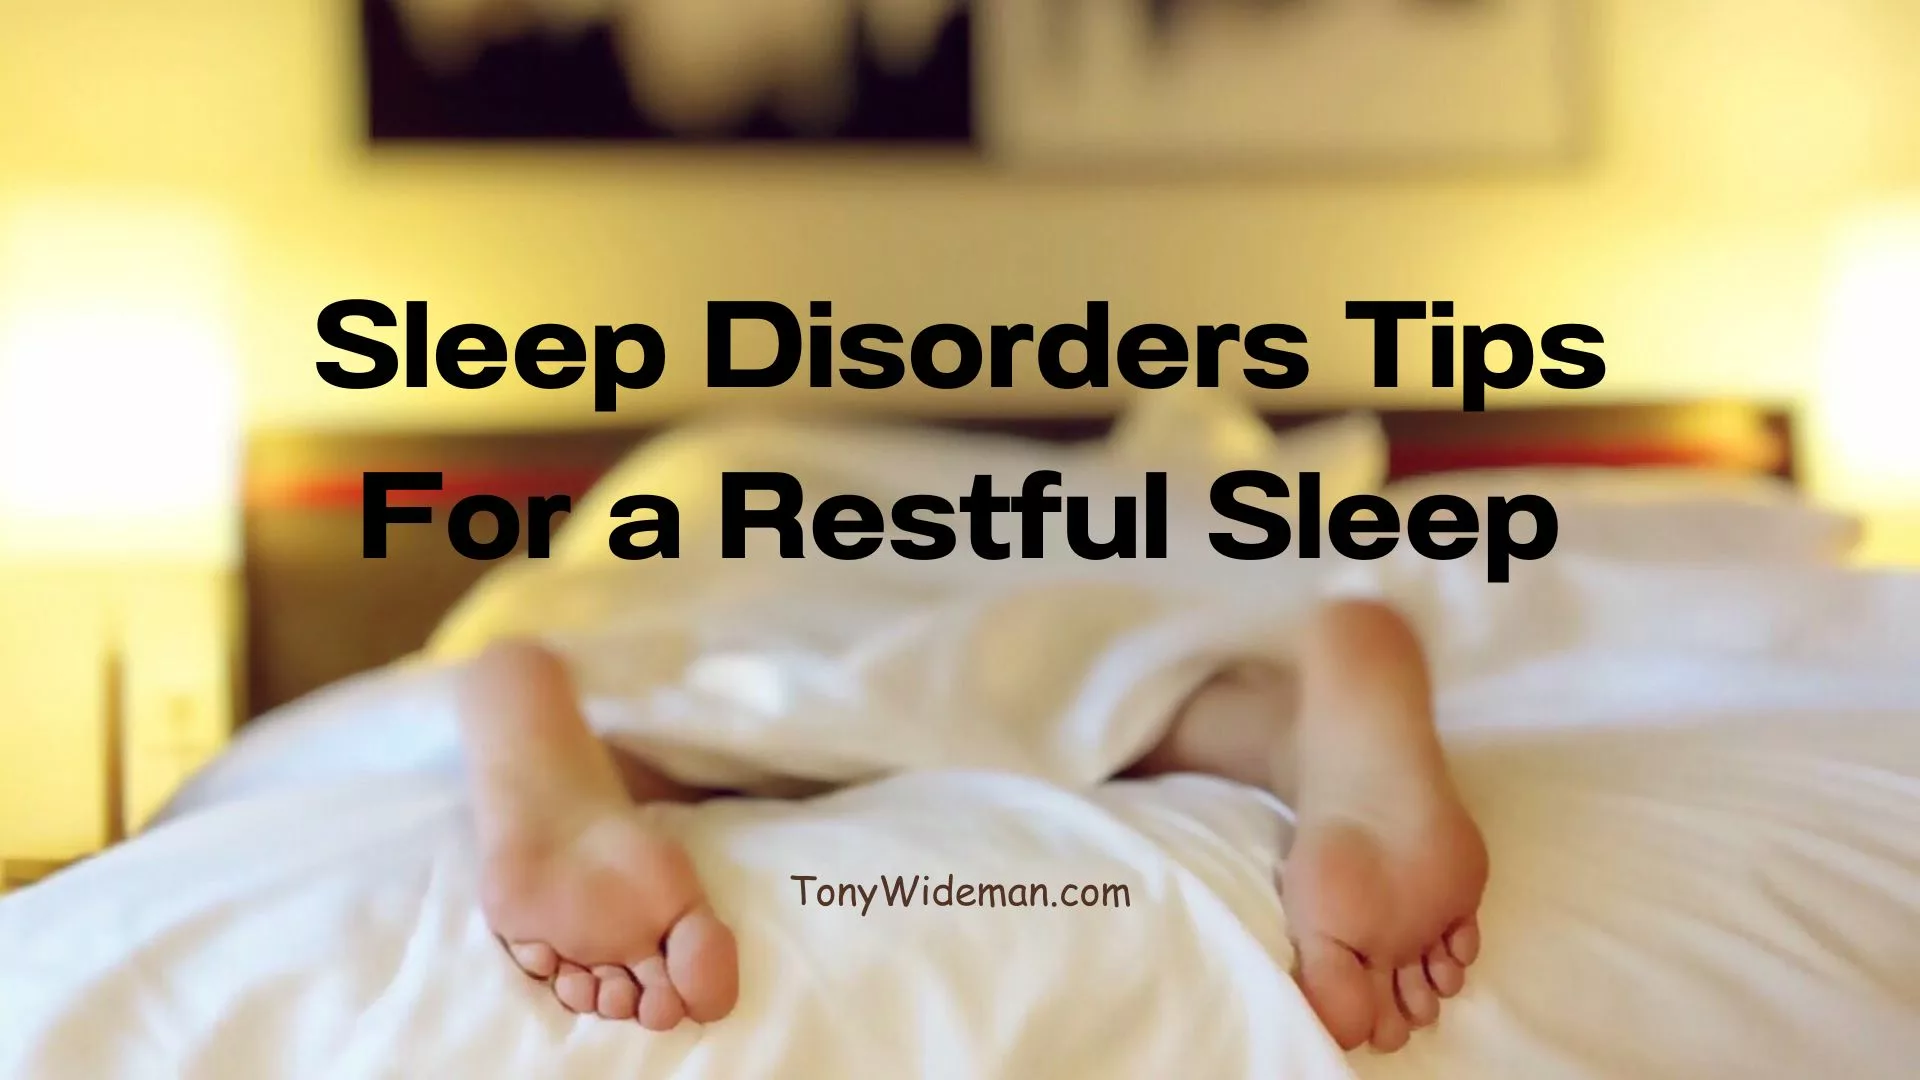 Sleep Disorders Tips For a Restful Sleep